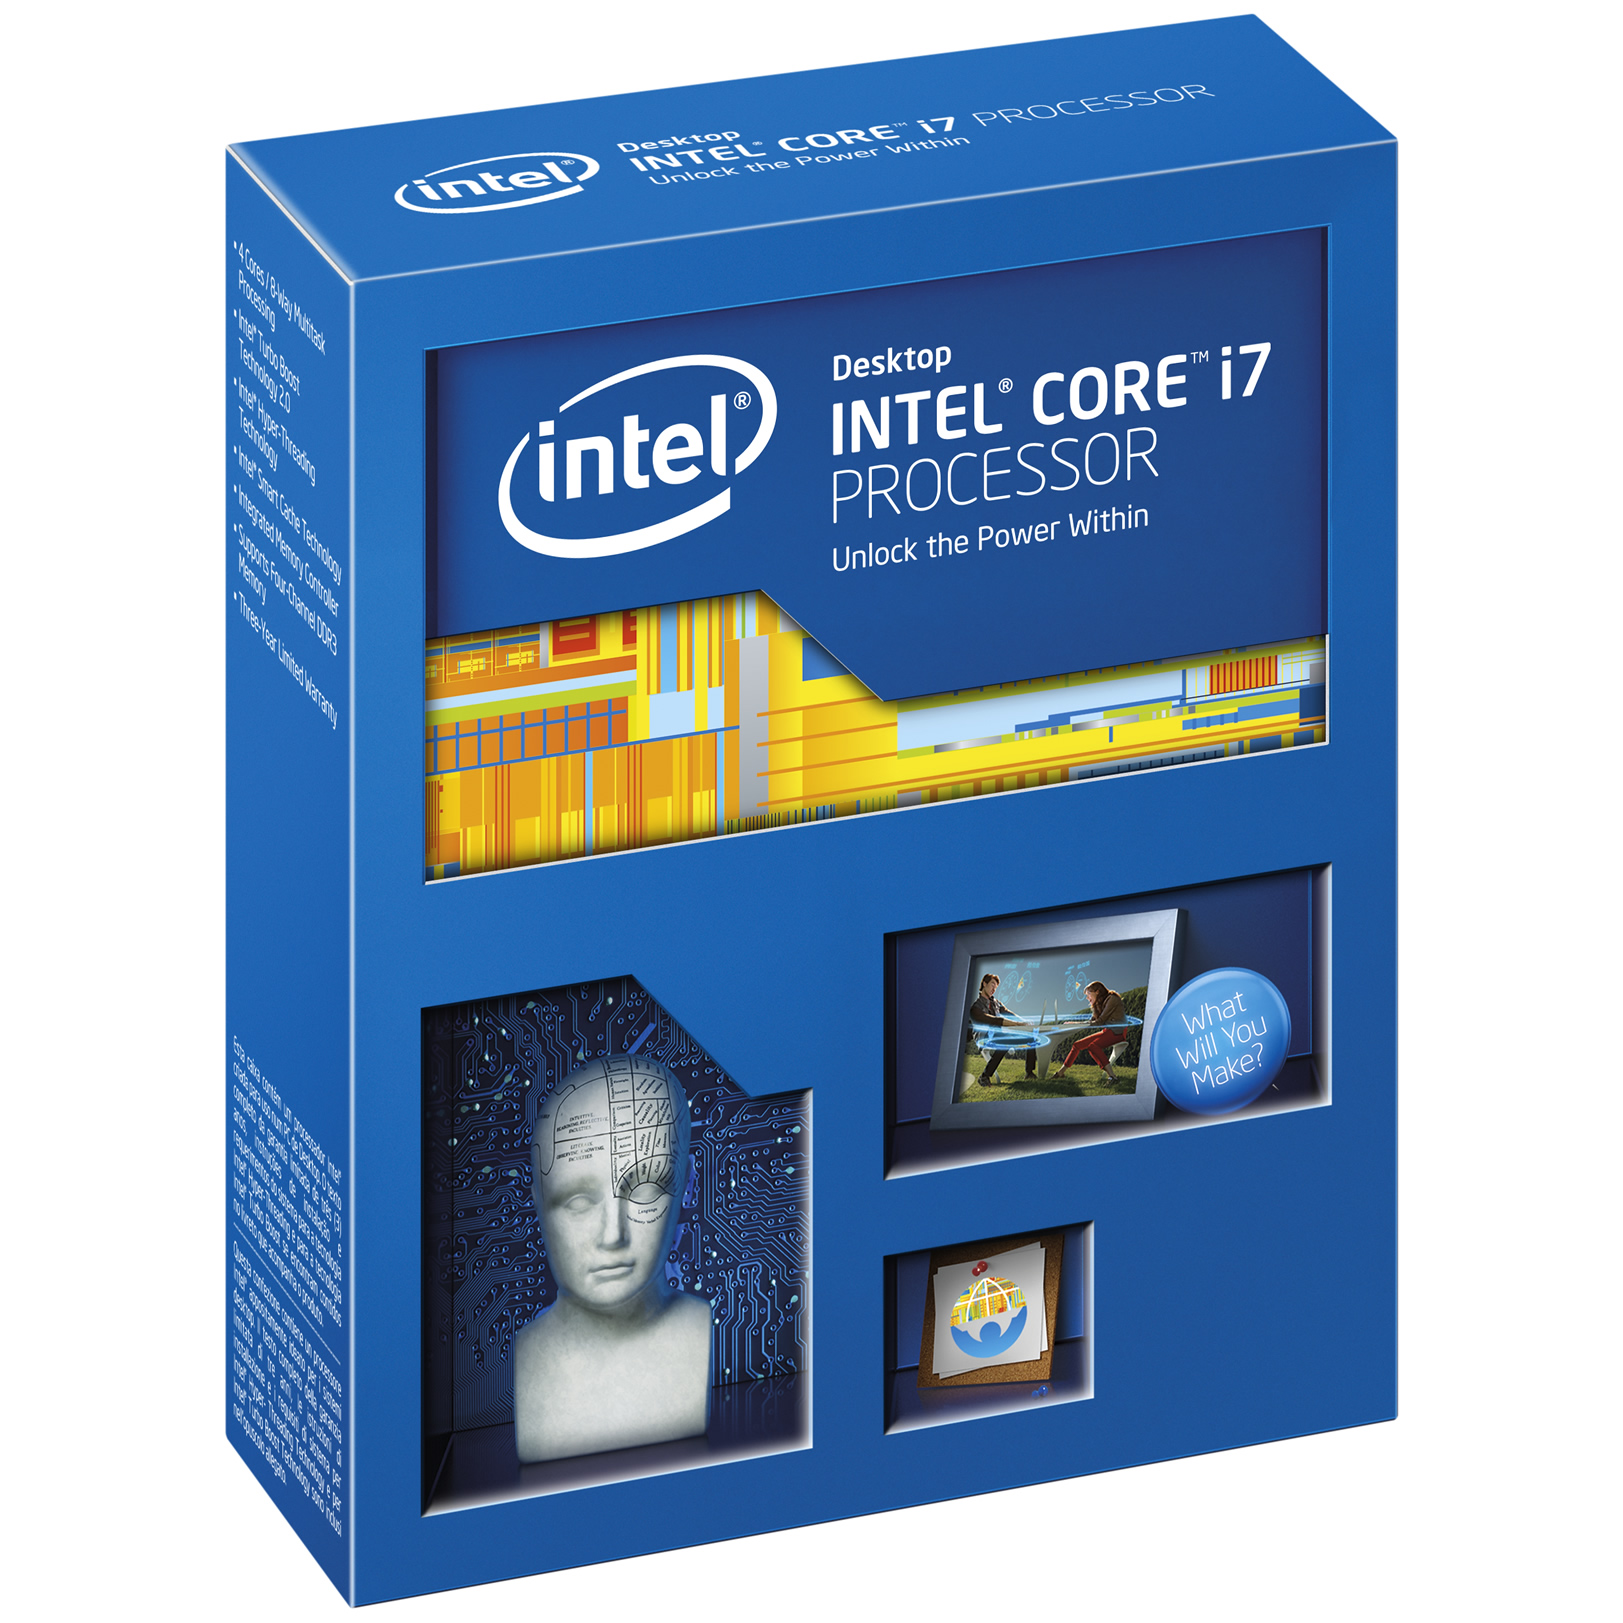 Intel i7-4820K 3.70GHz (Ivybridge-E) Socket LGA2011 Processor - Retail (BX8